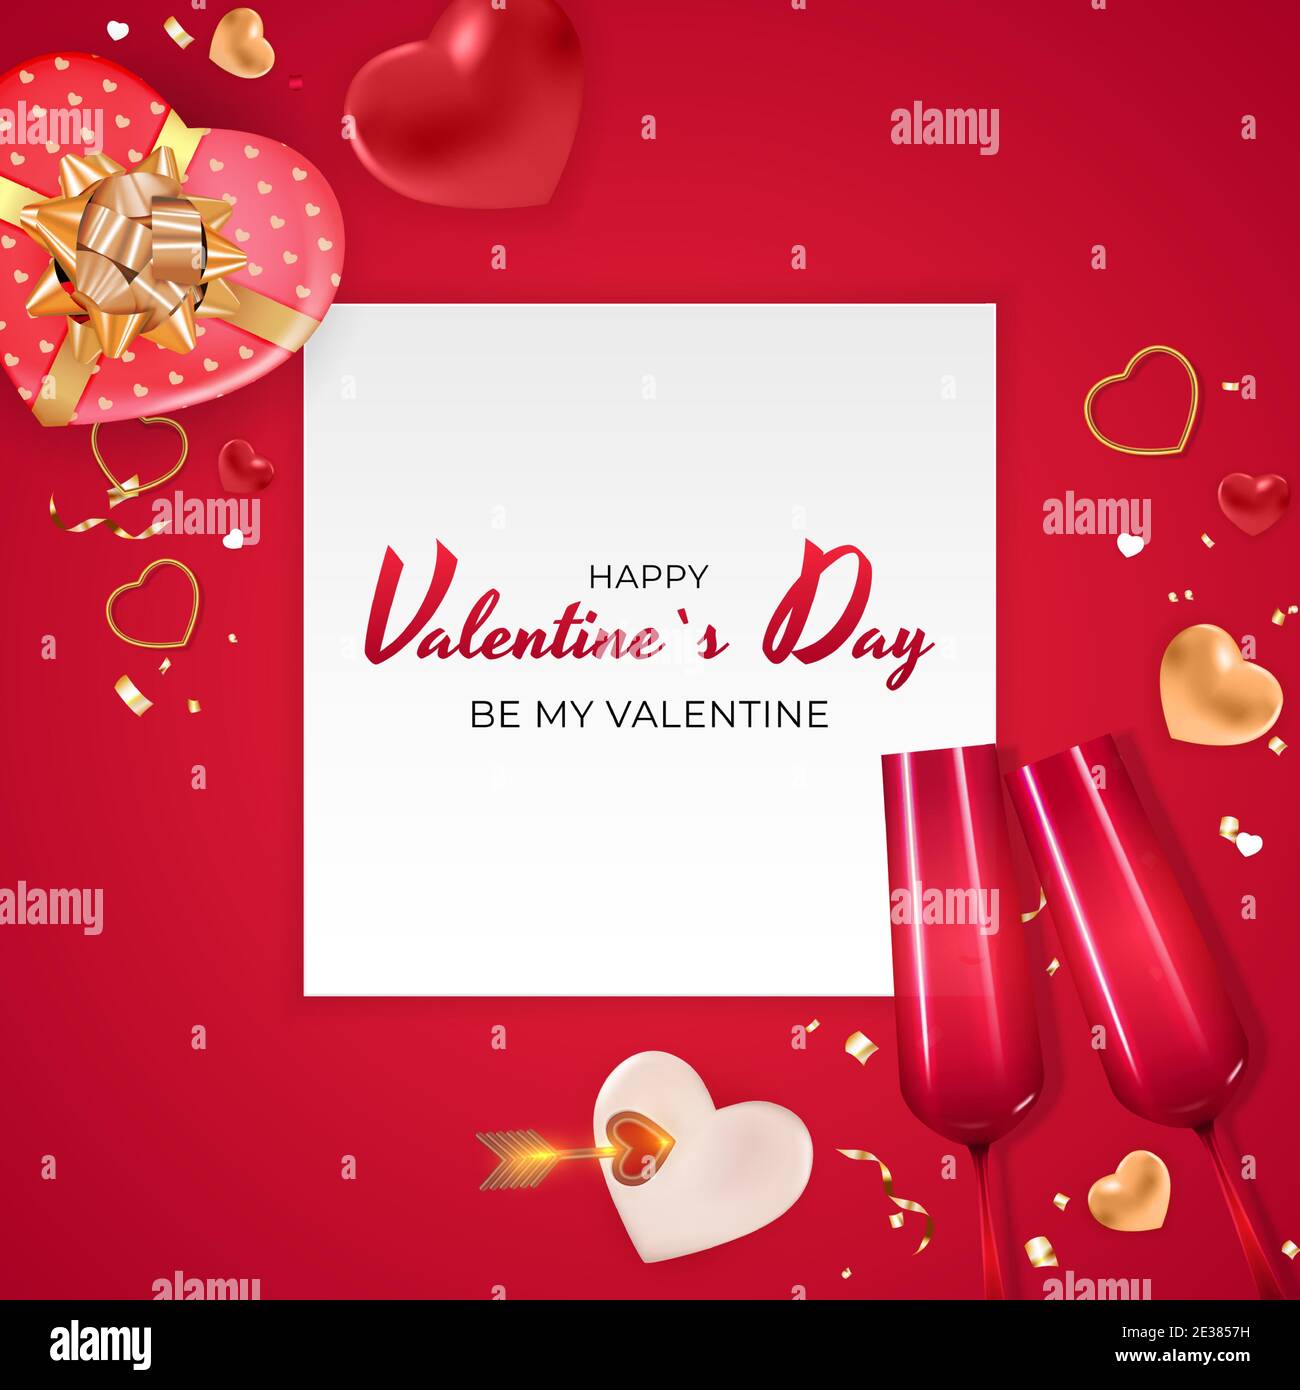 Happy valentines day - elegant graphic design card